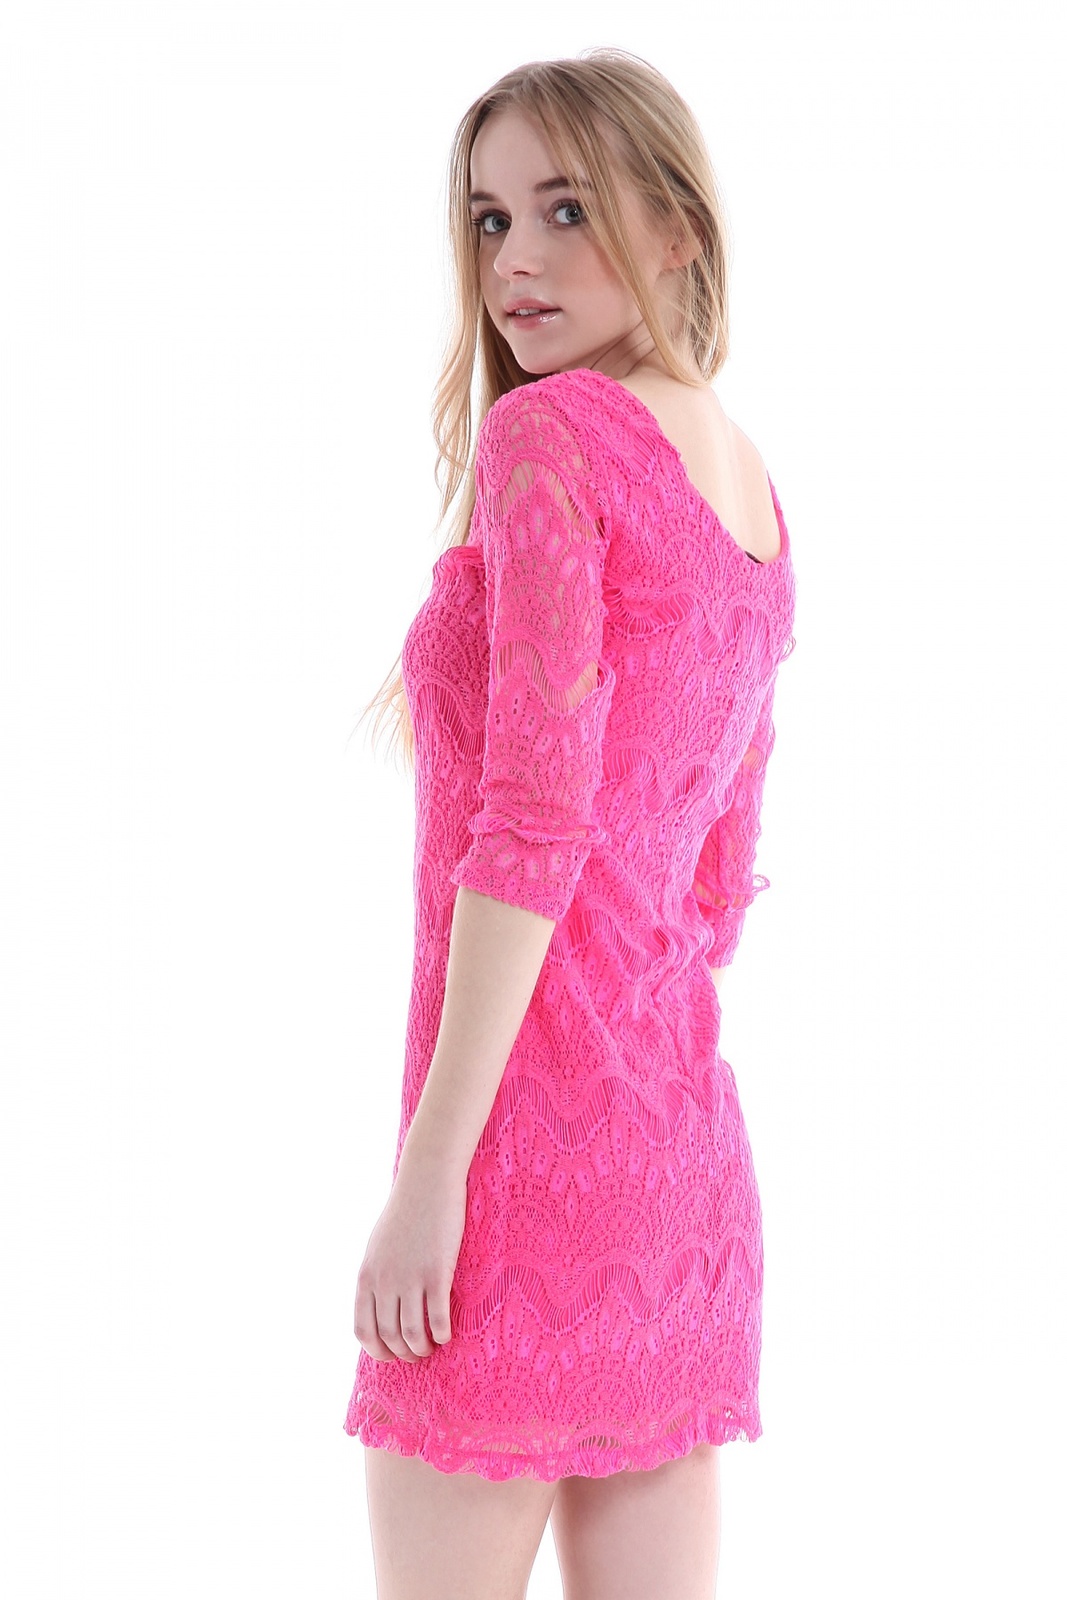 Terranova pink csipke miniruha 2015 fotója